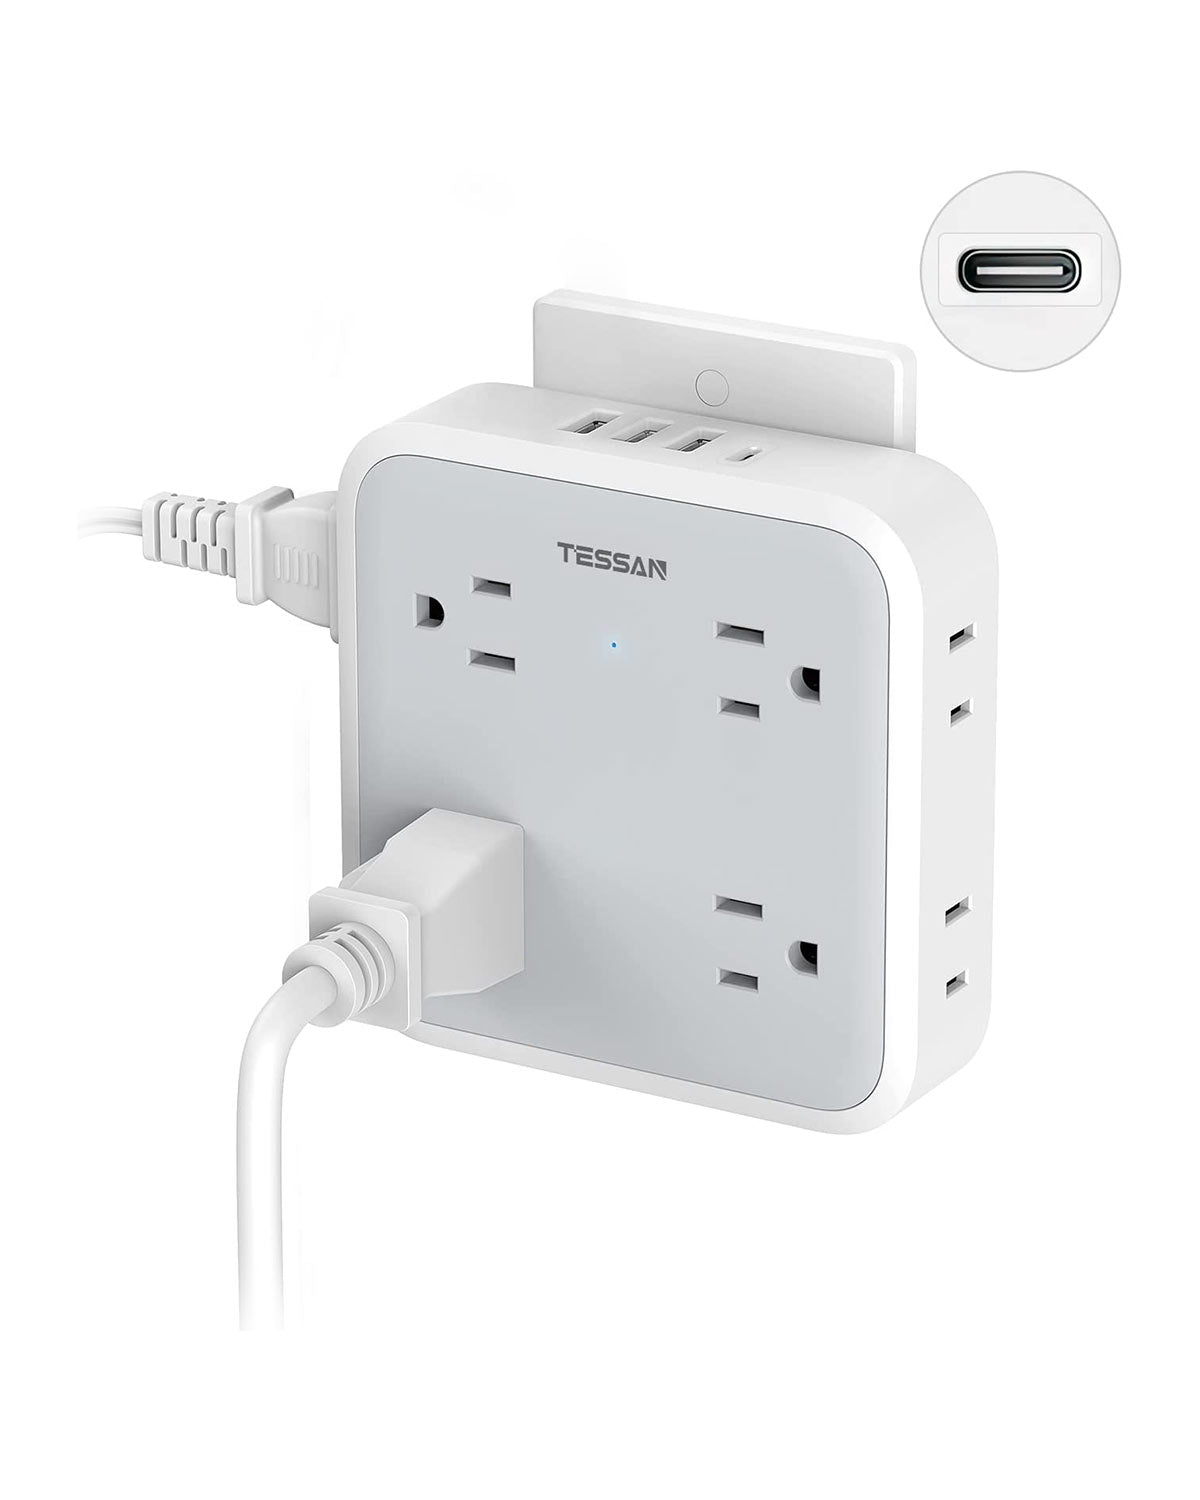 TESSAN USB Wall Charger, 4 Electrical USB Hub(1 USB C Port) Charging Station